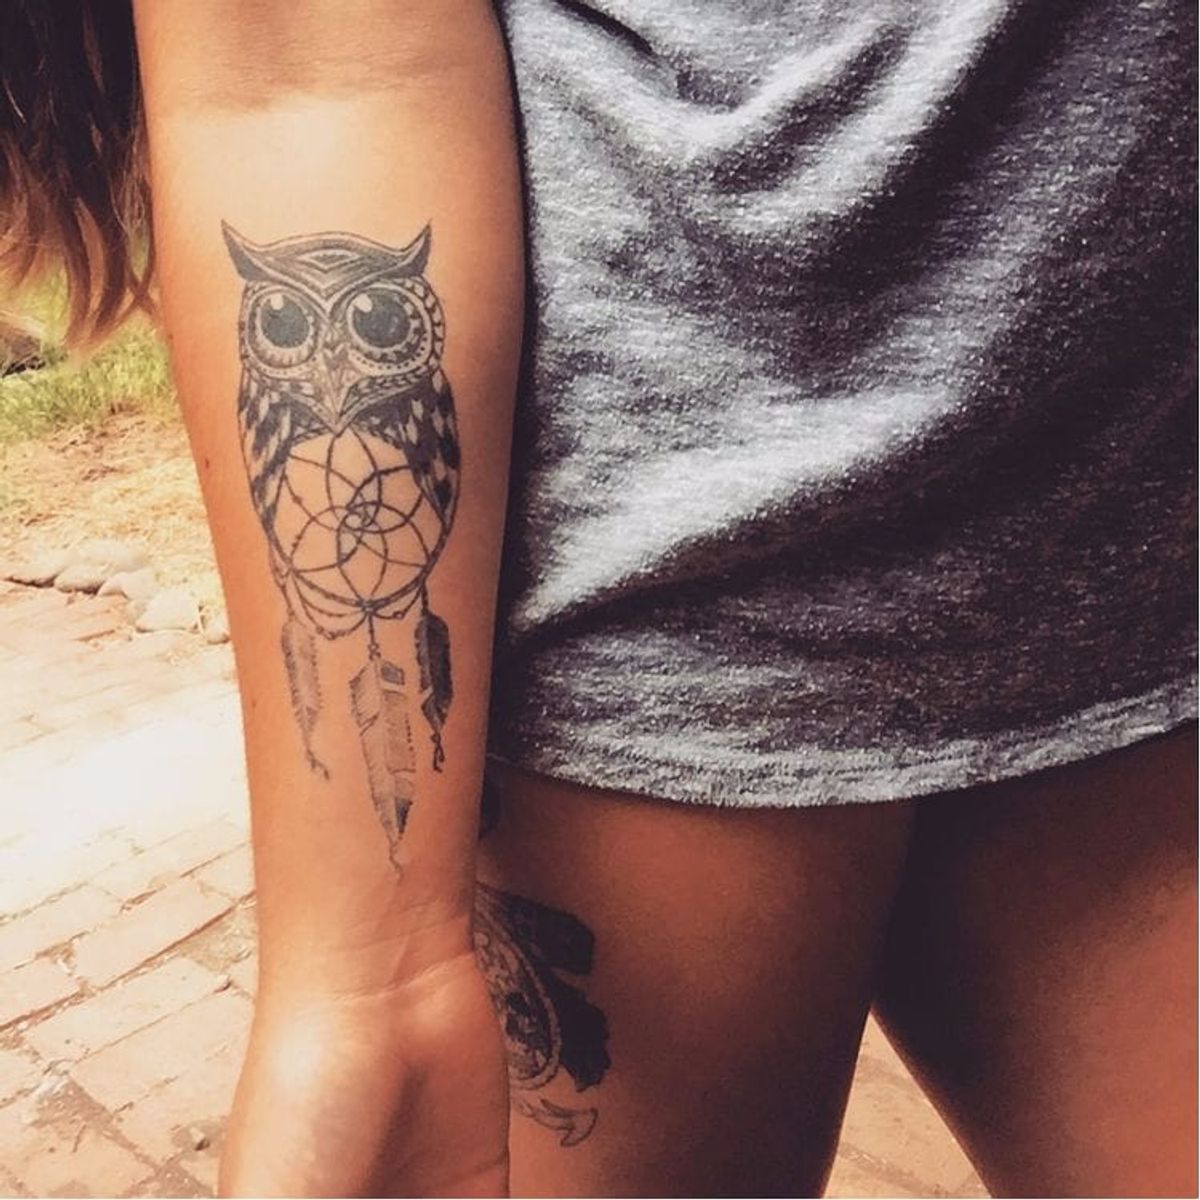 Tattoo uploaded by Tattoodo • Owl dreamcatcher tattoo via Pinterest # dreamcatcher #tribal #nativeamerican #feathers #blackwork #owl • Tattoodo